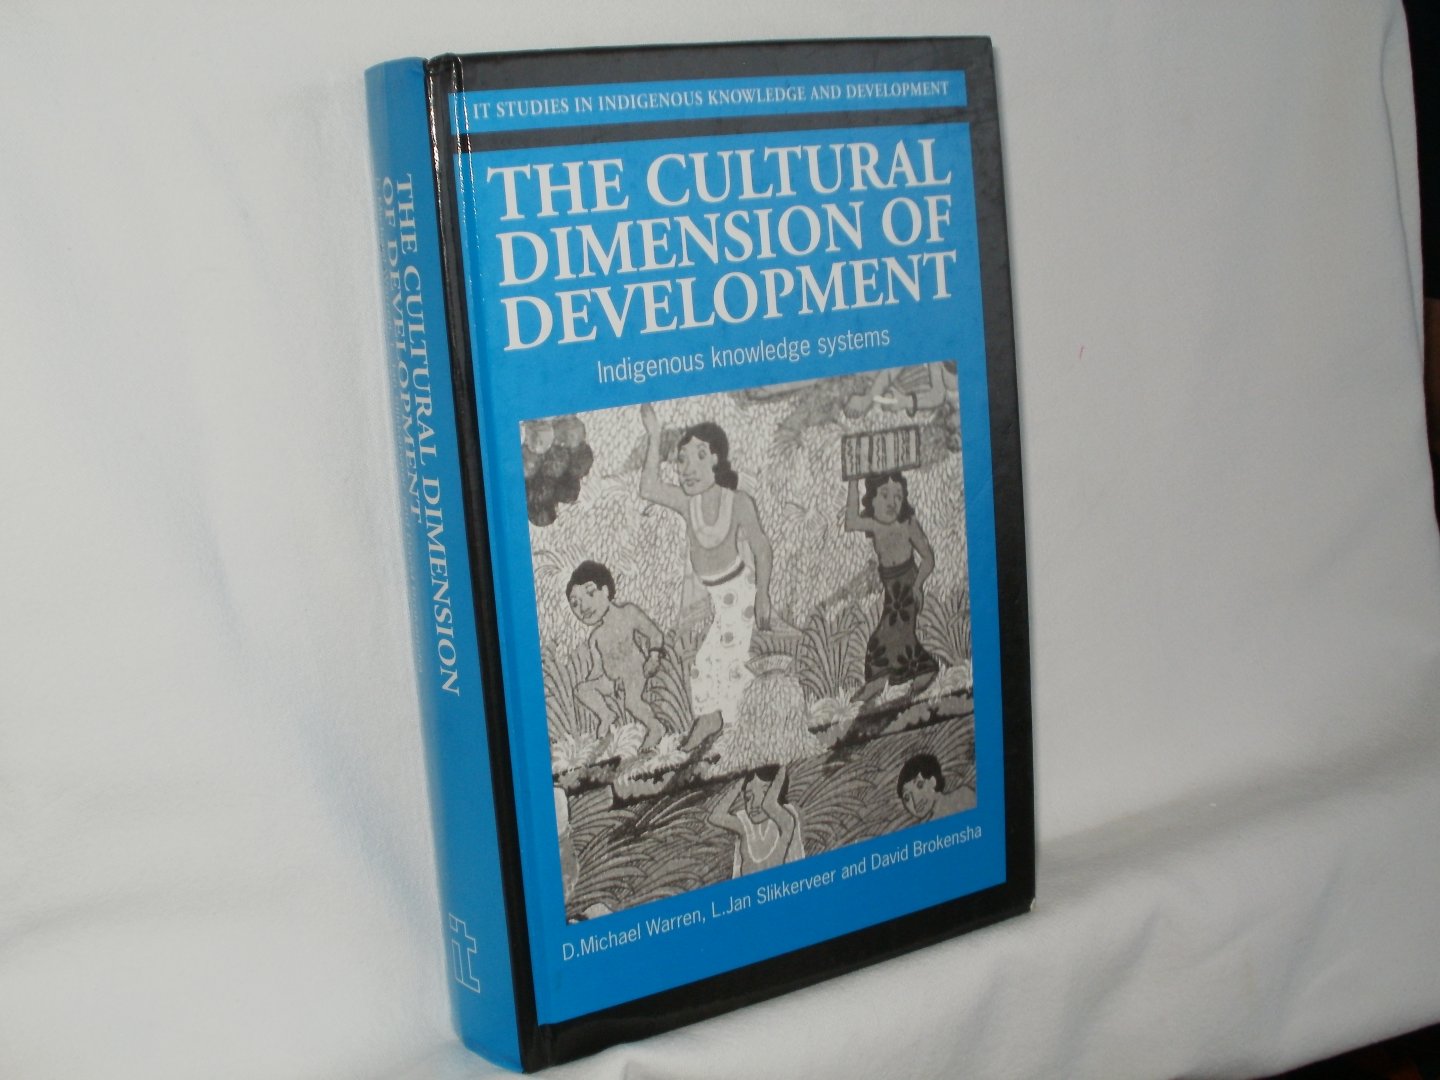 Warren, Michael D.; Slikkerveer, Jan L.; Brokensha, David (eds.) - The Cultural Dimension of Development: Indigenous Knowledge Systems